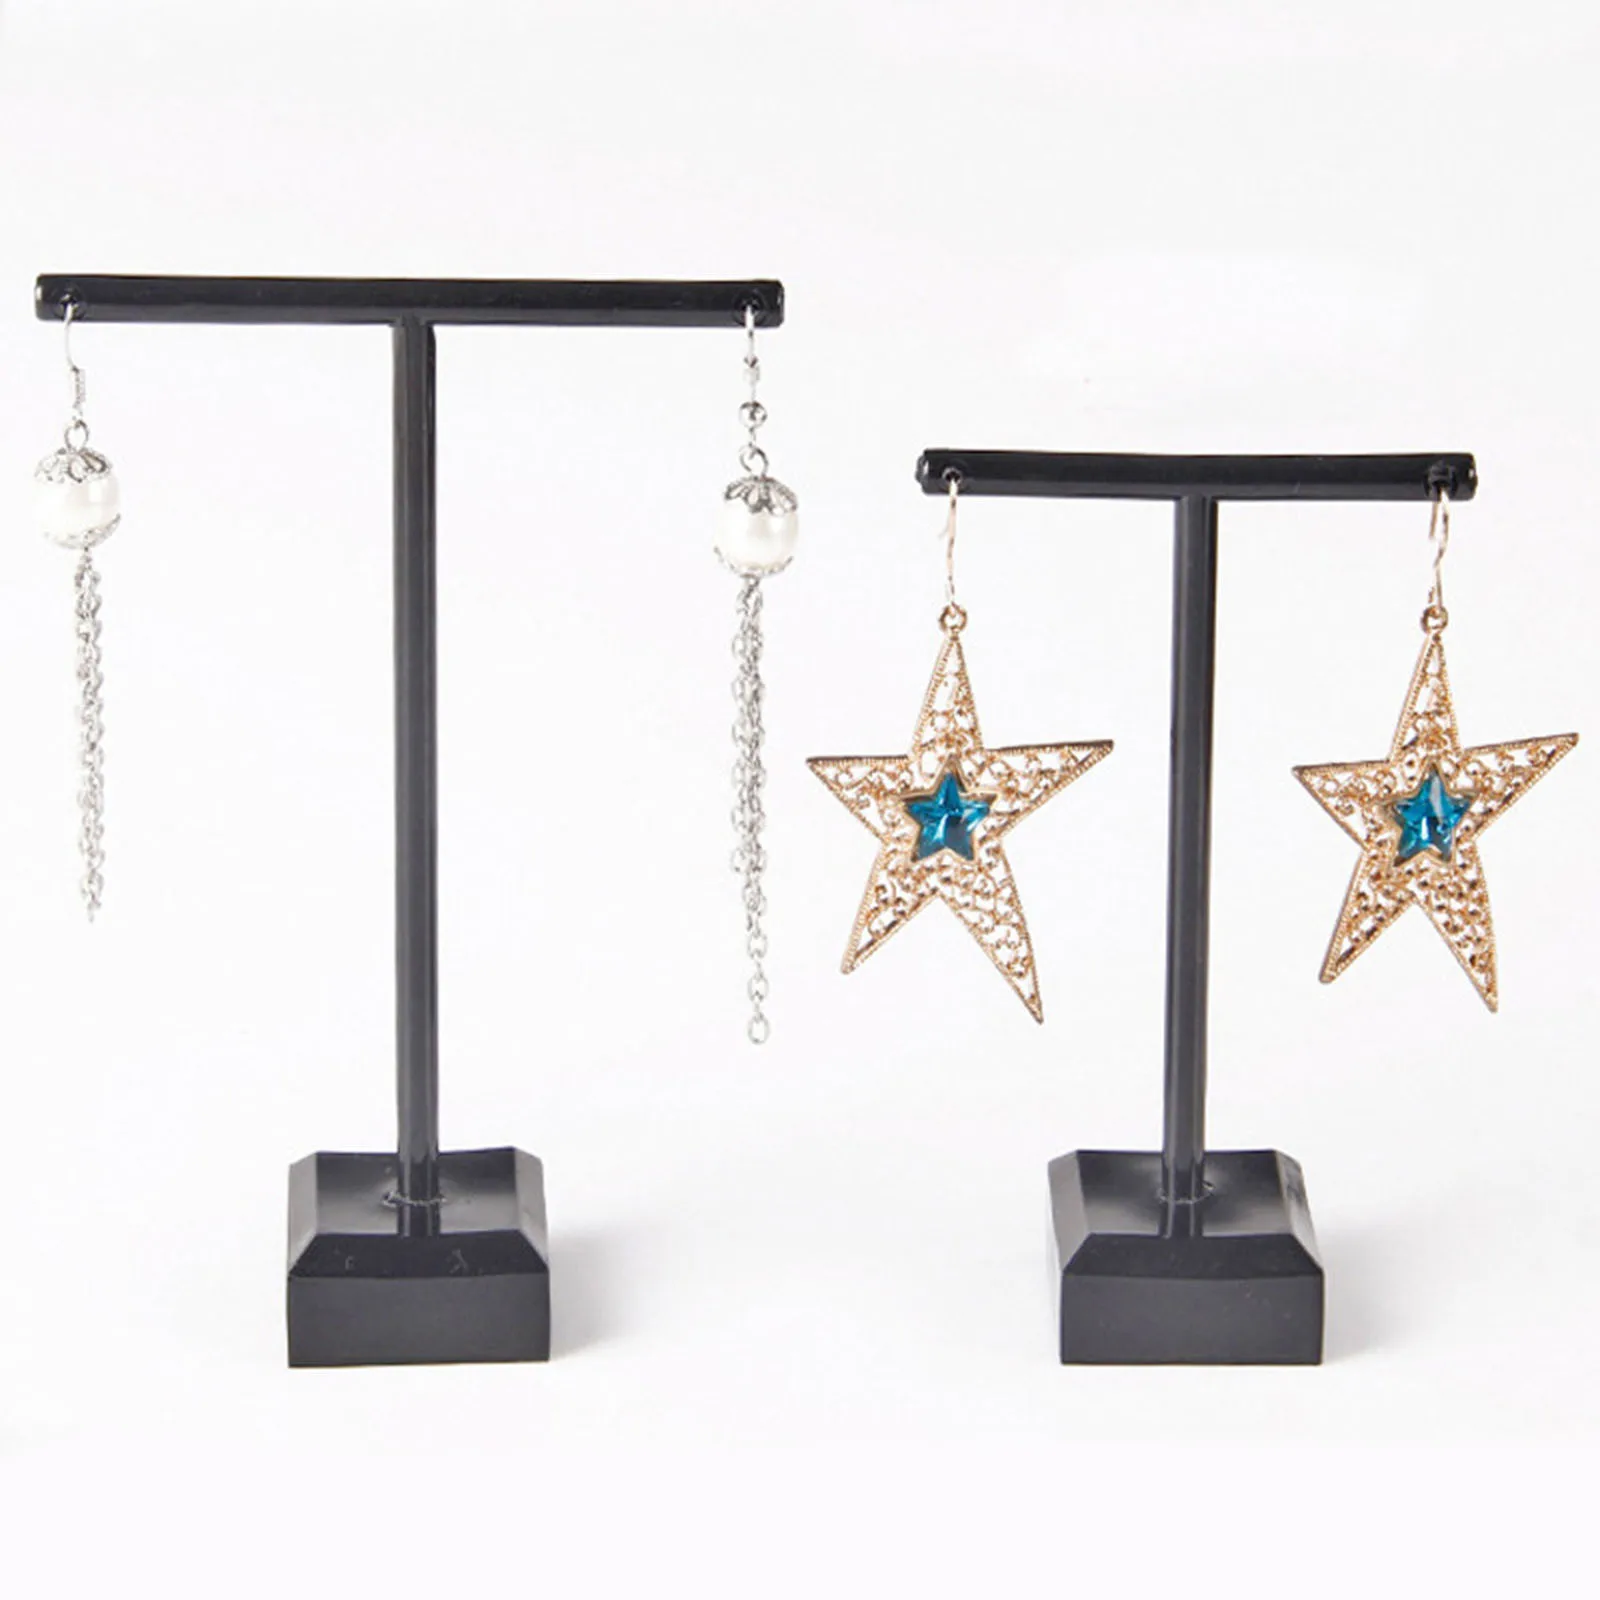 2Pcs Metal Earrings Holder Earrings Organizer Jewelry Display Stand T Stand for Stud Dangle Hoop Earrings (Black)